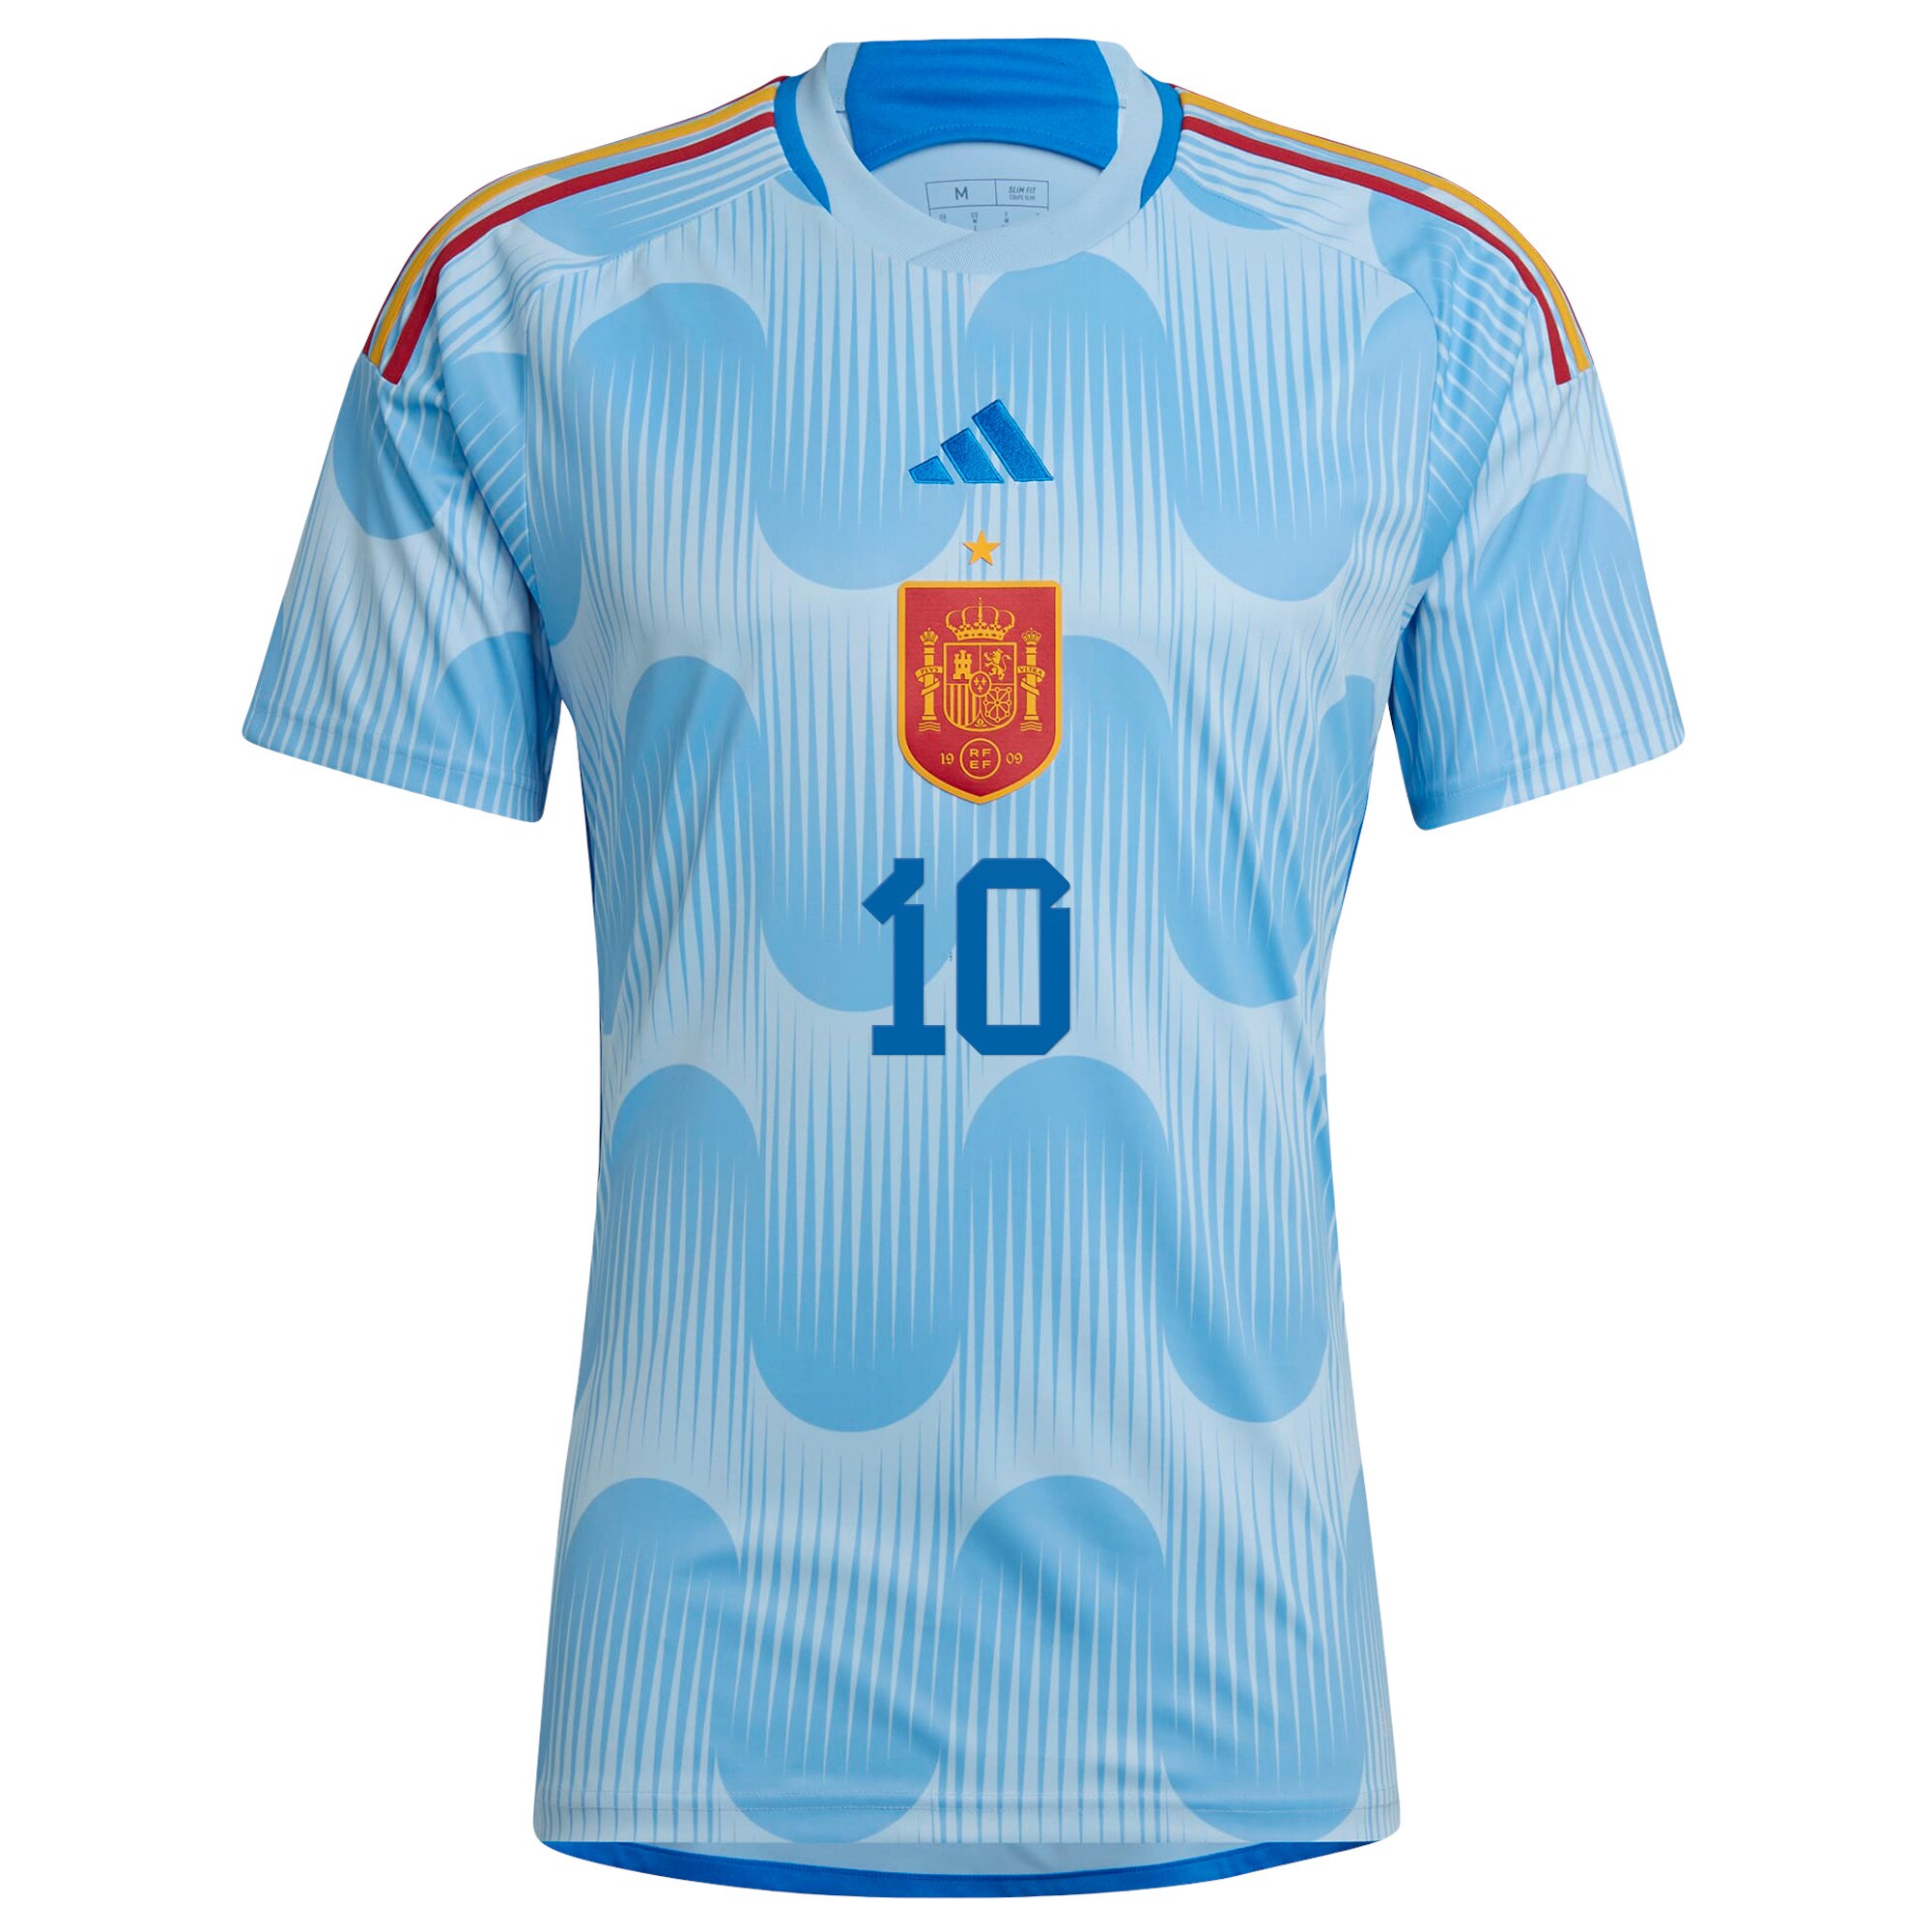 Spain Away Shirt with Thiago 10 printing